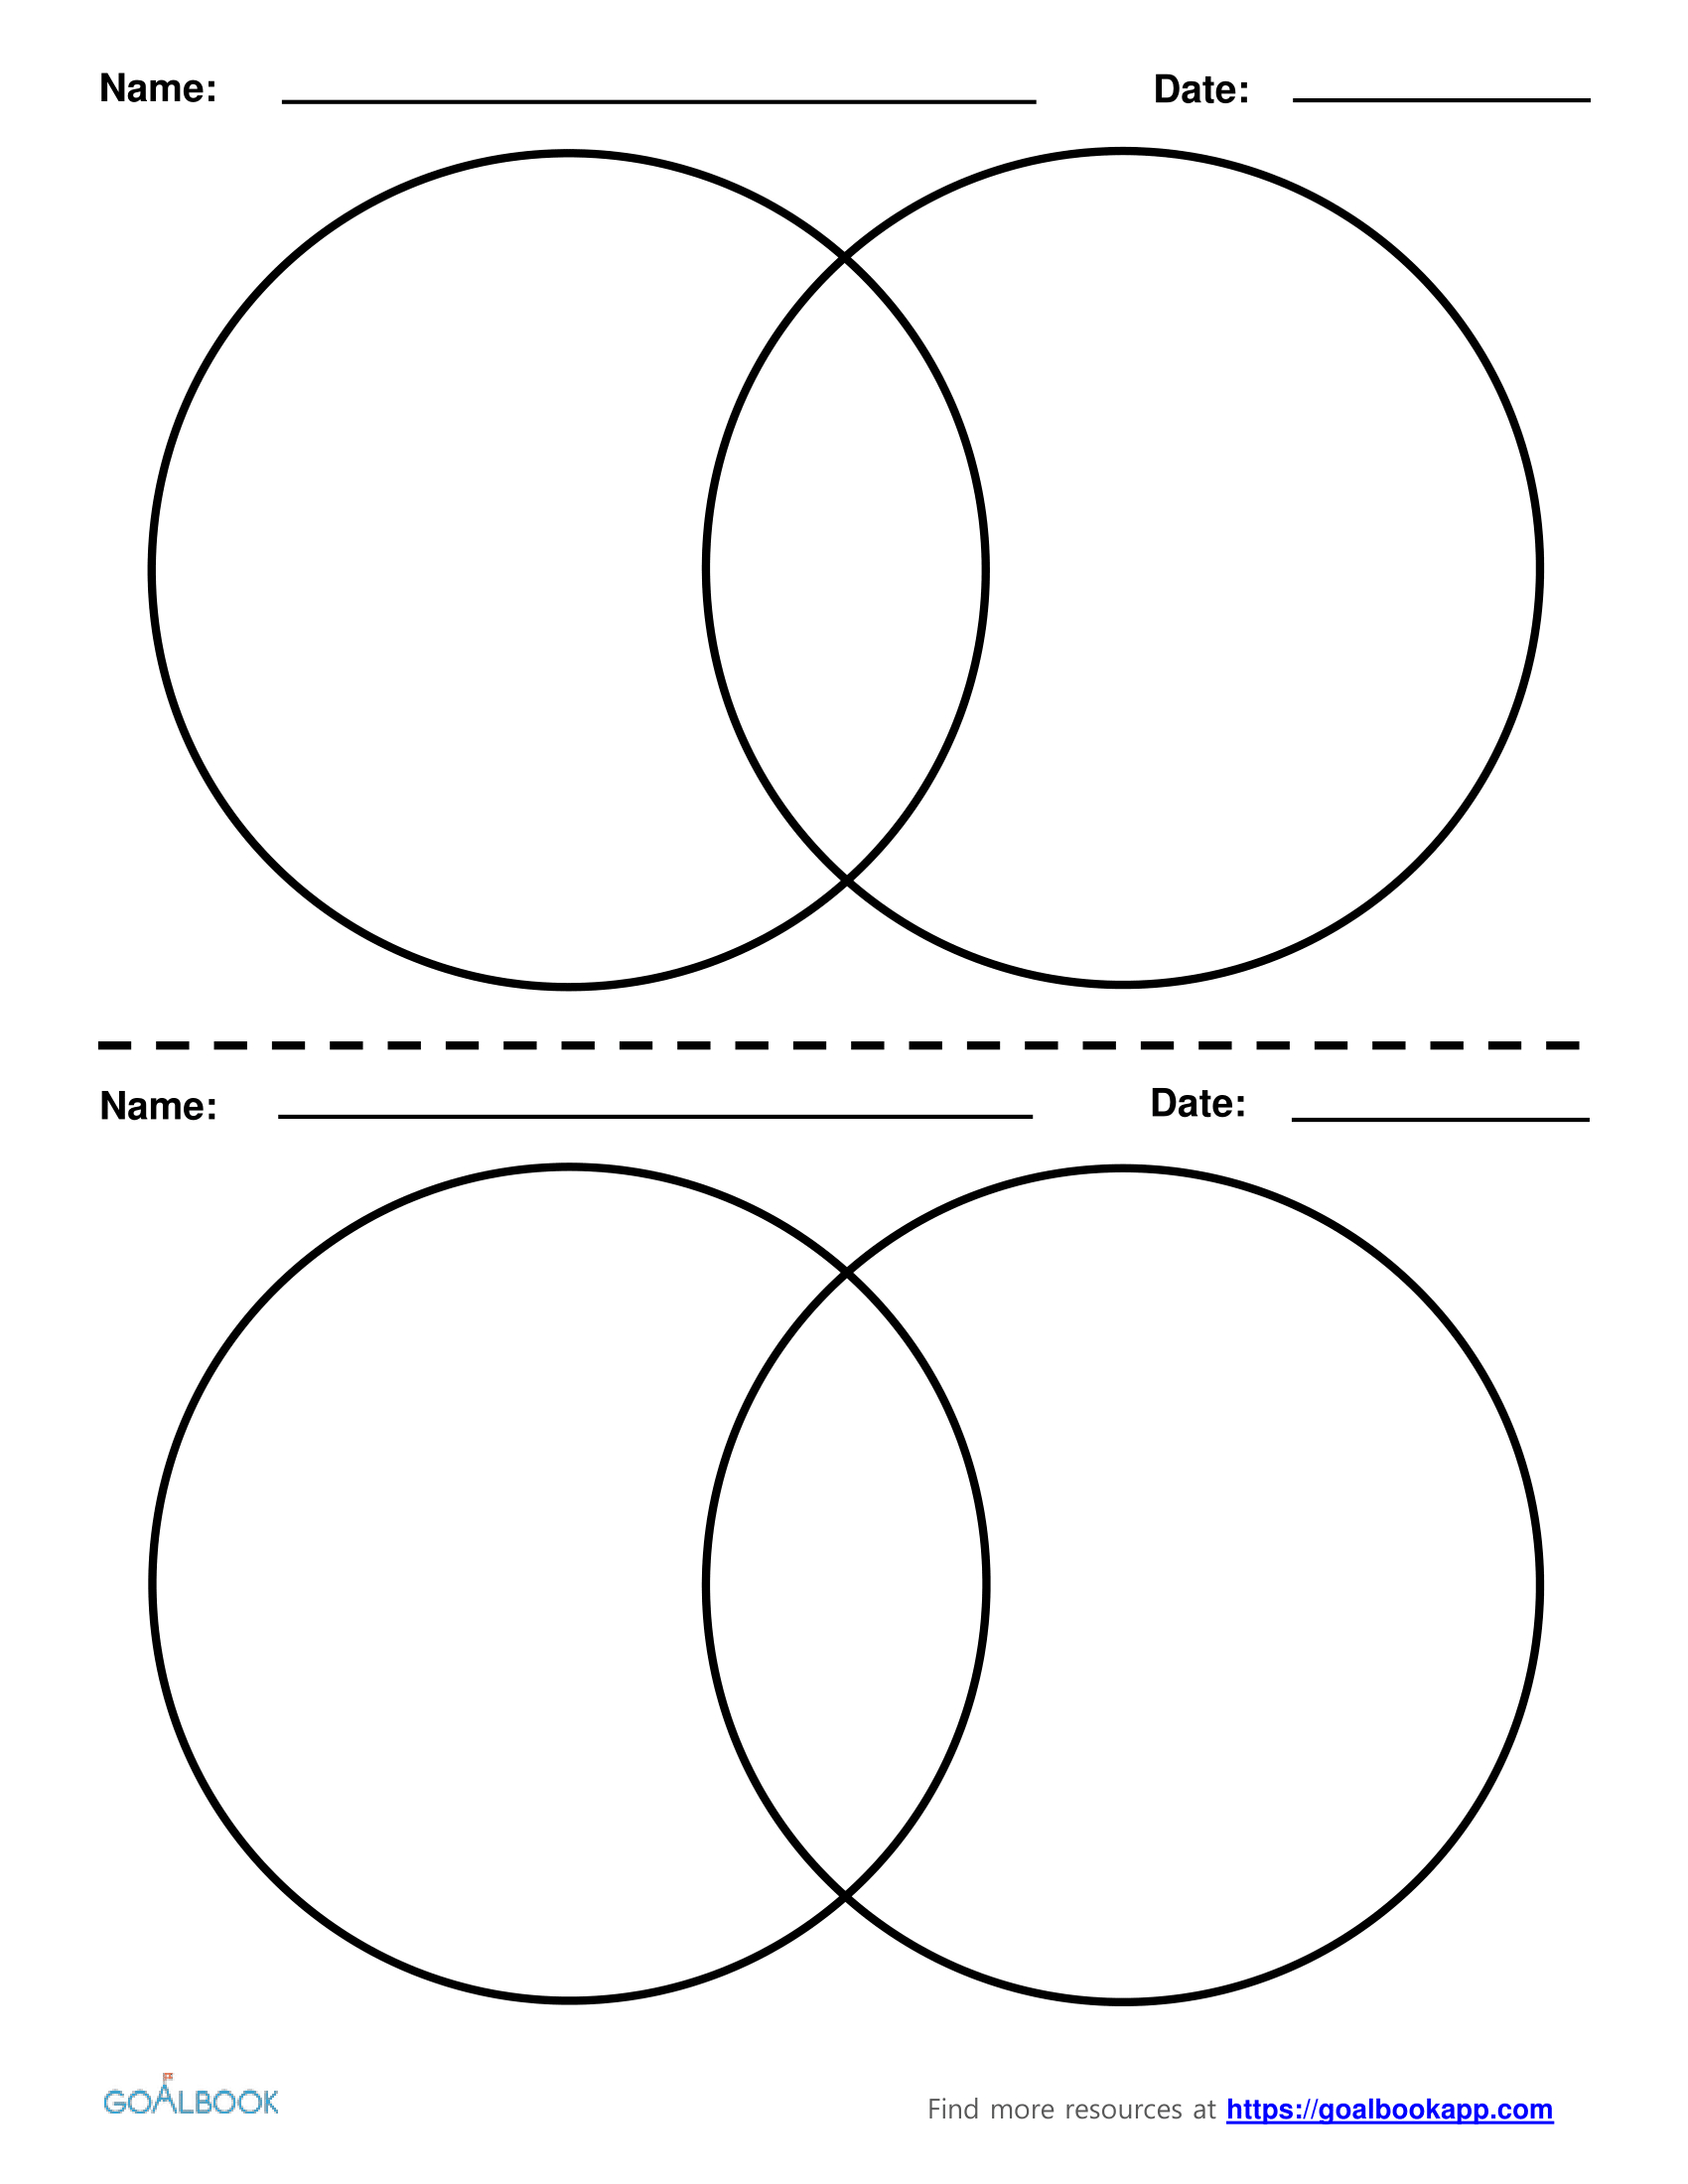 Blank Venn Diagram Printable Venn Diagram 2 Circles Download Them And Try To Solve